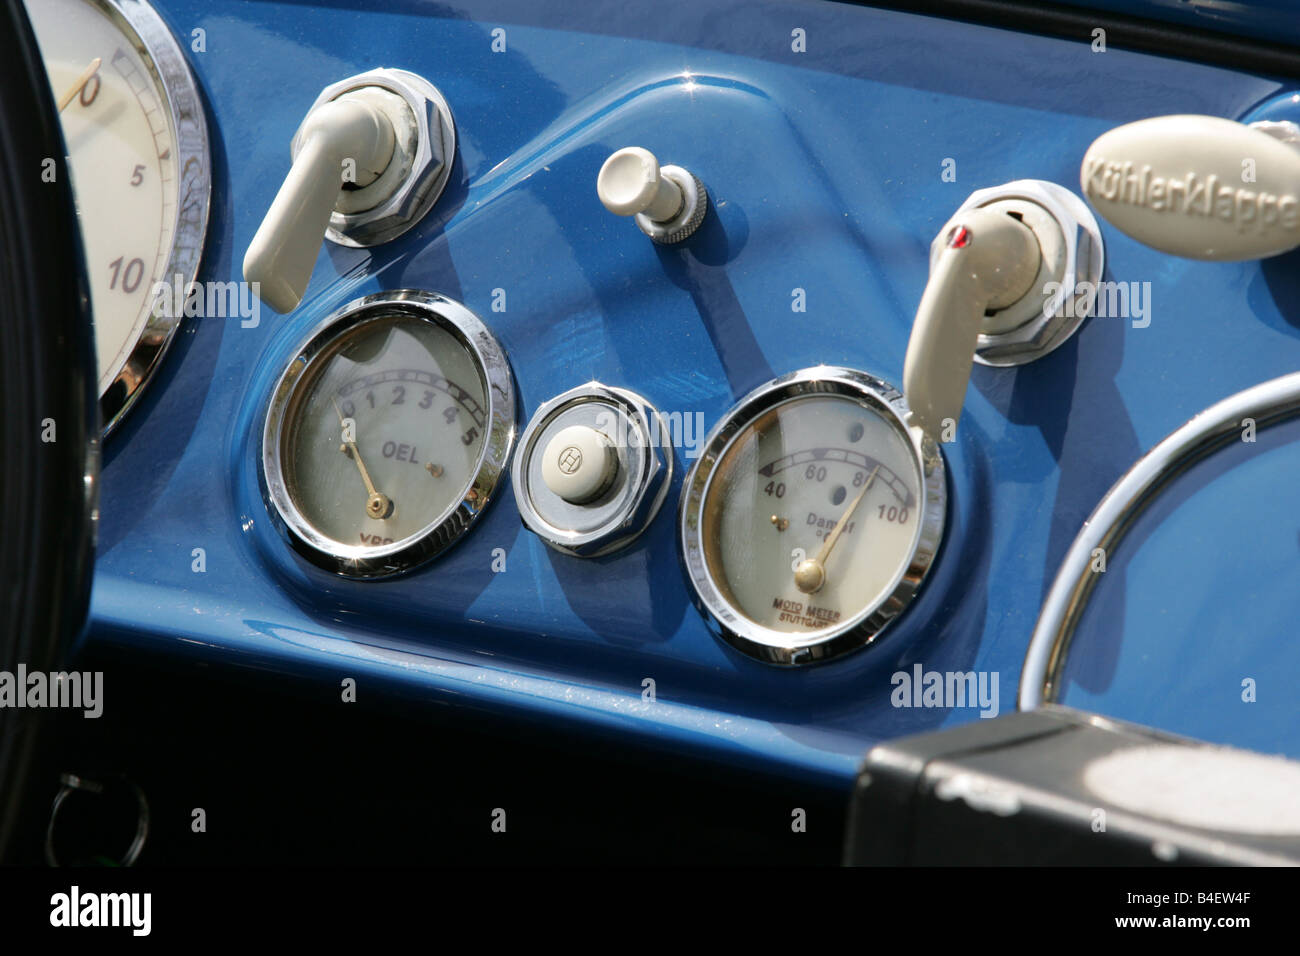 https://c8.alamy.com/compde/b4ew4f/bmw-328-modell-jahr-1936-1939-blau-roadster-innenraum-cockpit-technik-technische-technisch-zubehor-zubehor-b4ew4f.jpg